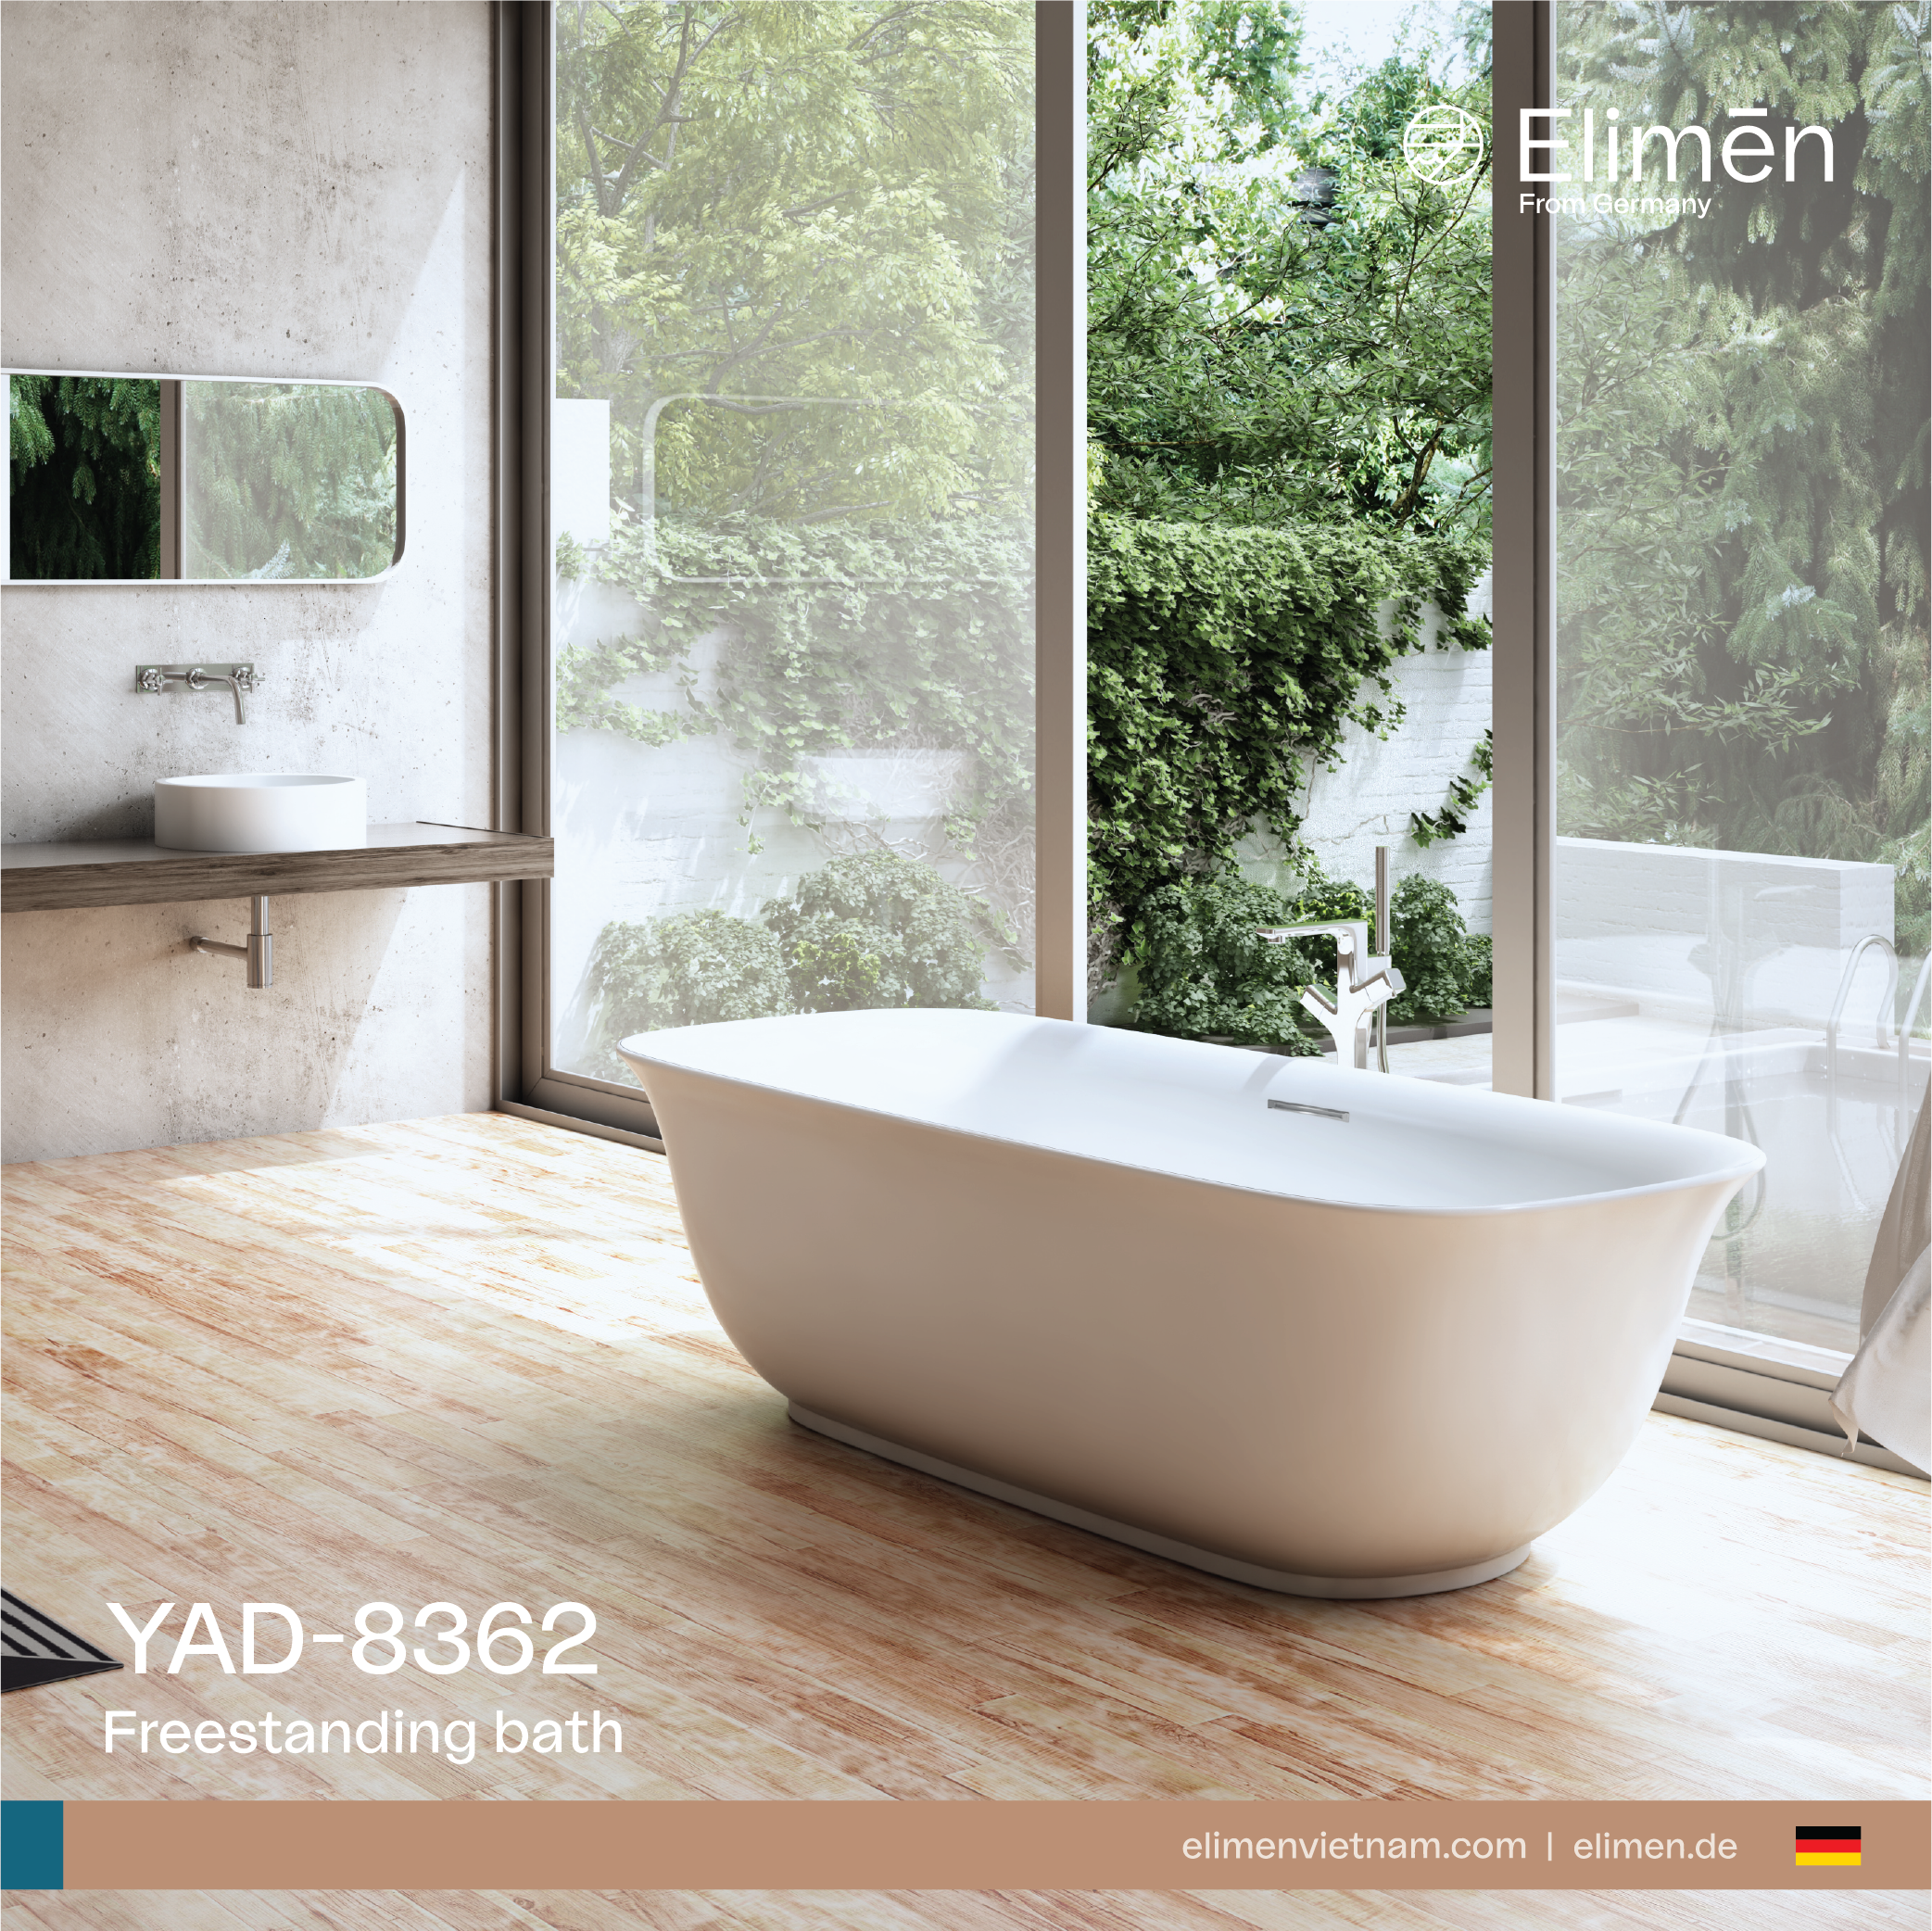 Elimen bathtub - Code YAD-8362-170